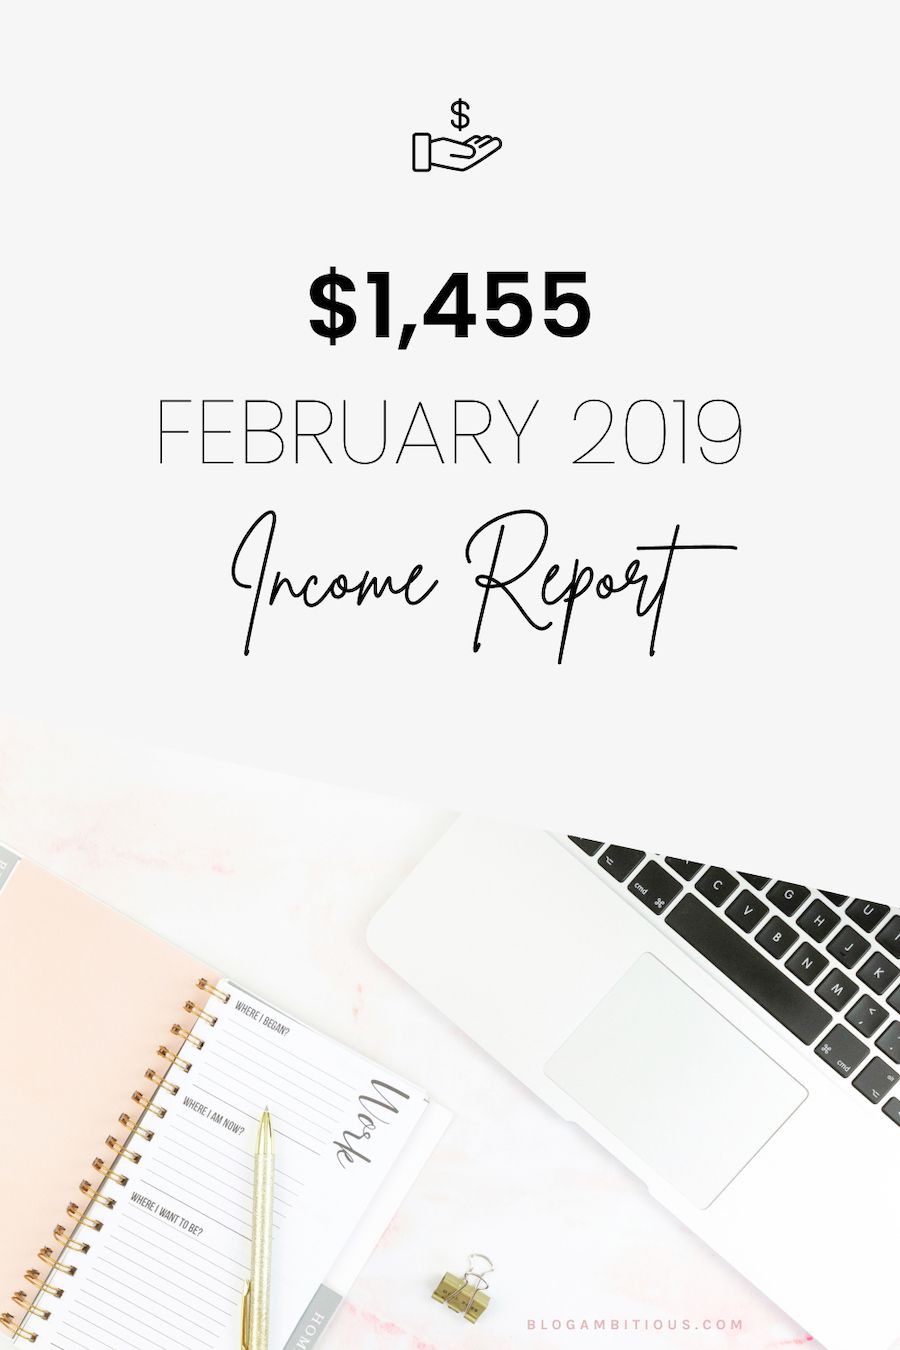 February 2019 Blog Income Report